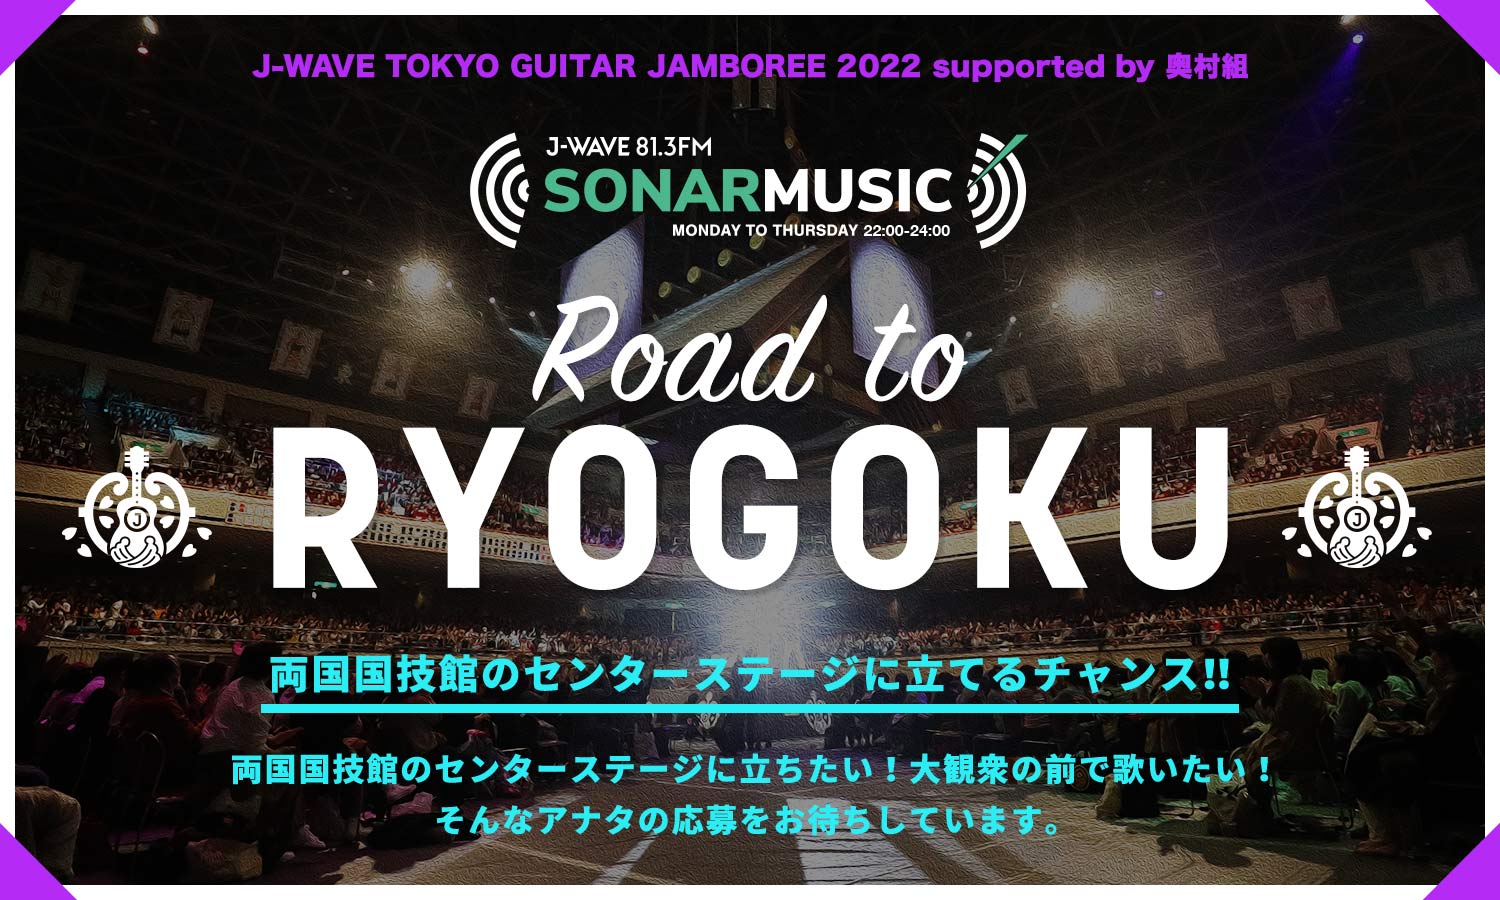 「J-WAVE TOKYO GUITAR JAMBOREE 2022 supported by 奥村組」初のオーディション企画を開催！SONAR MUSIC Road to RYOGOKU